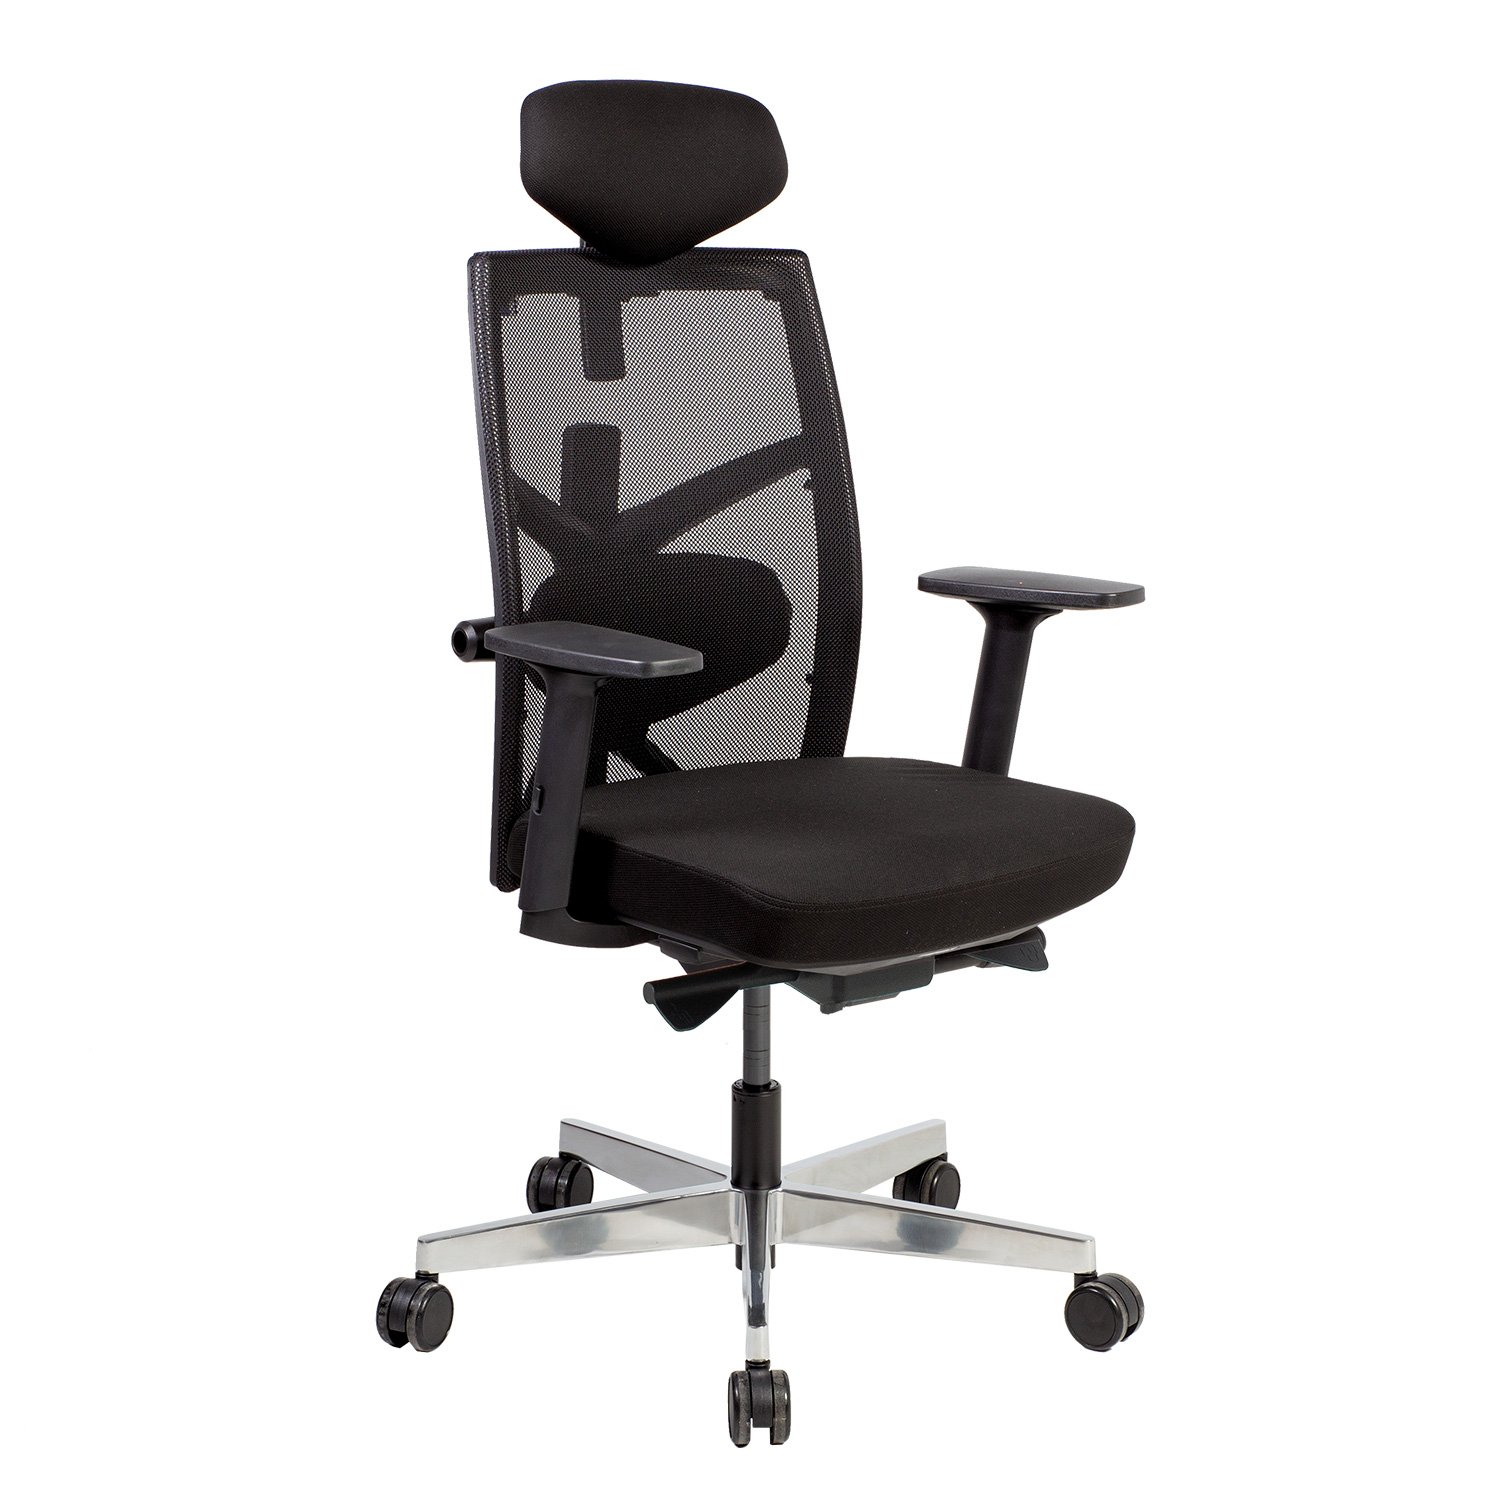 Biuro kėdė TUNE 70x70x111-128 cm, juoda - 1